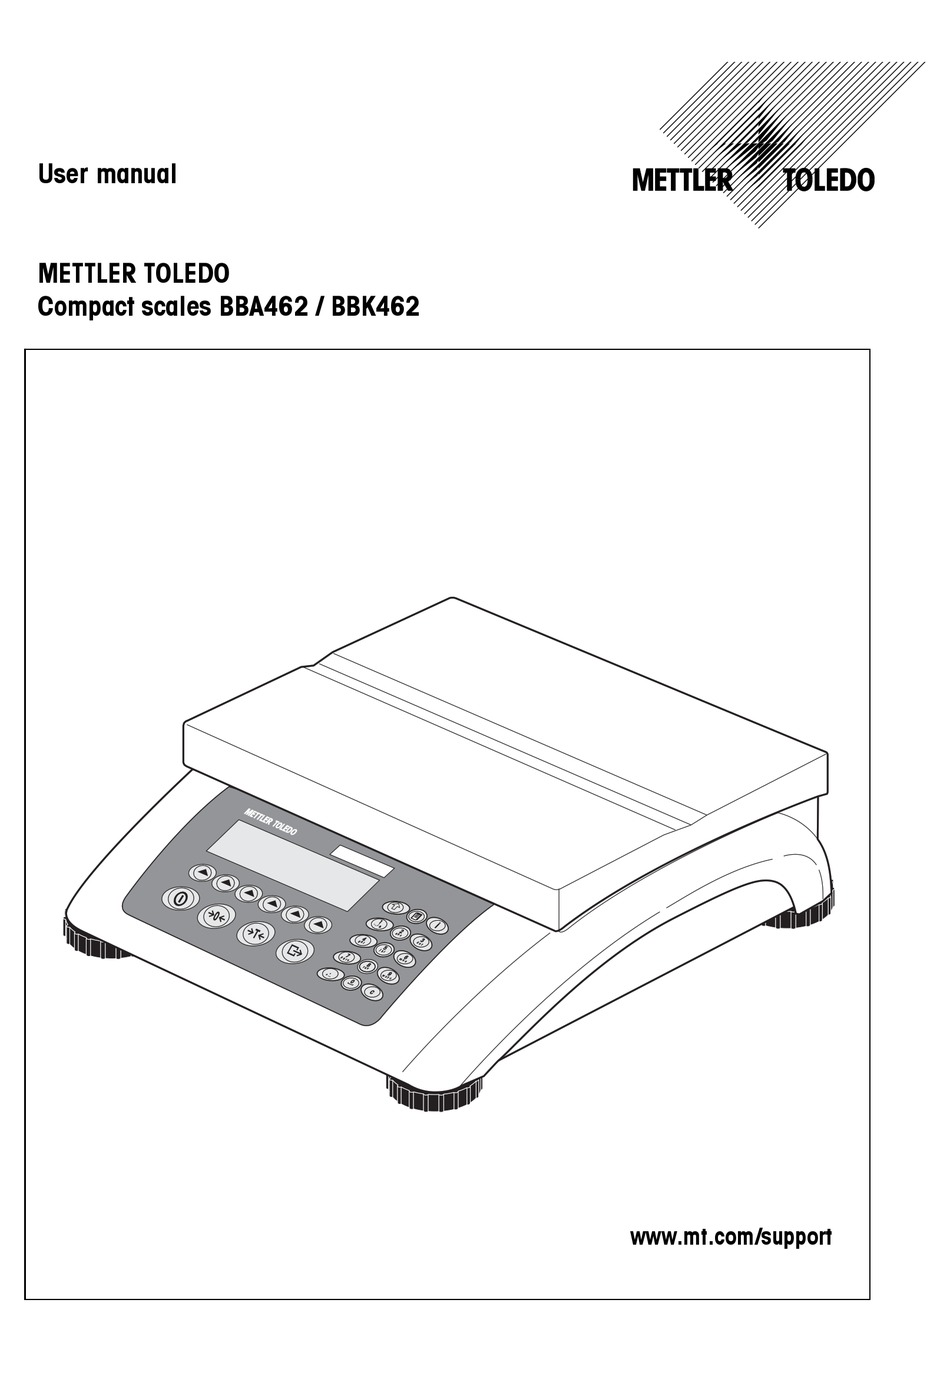 METTLER TOLEDO BBA462 USER MANUAL Pdf Download | ManualsLib